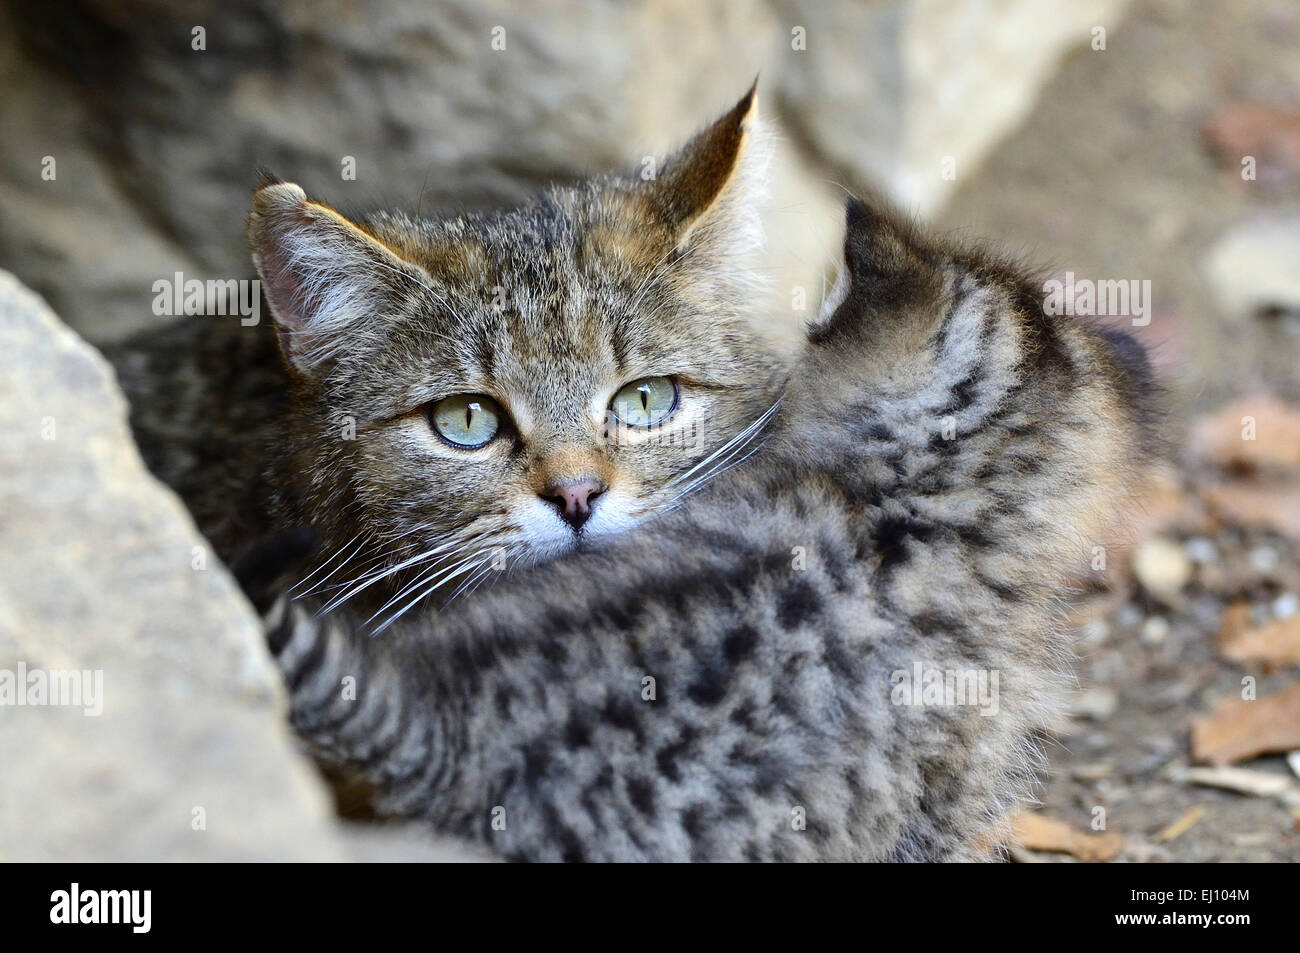 Wildcat, predator, small cats, cats, cat, wild cats, Felis silvestris, wildcats, predators, Germany, Stock Photo